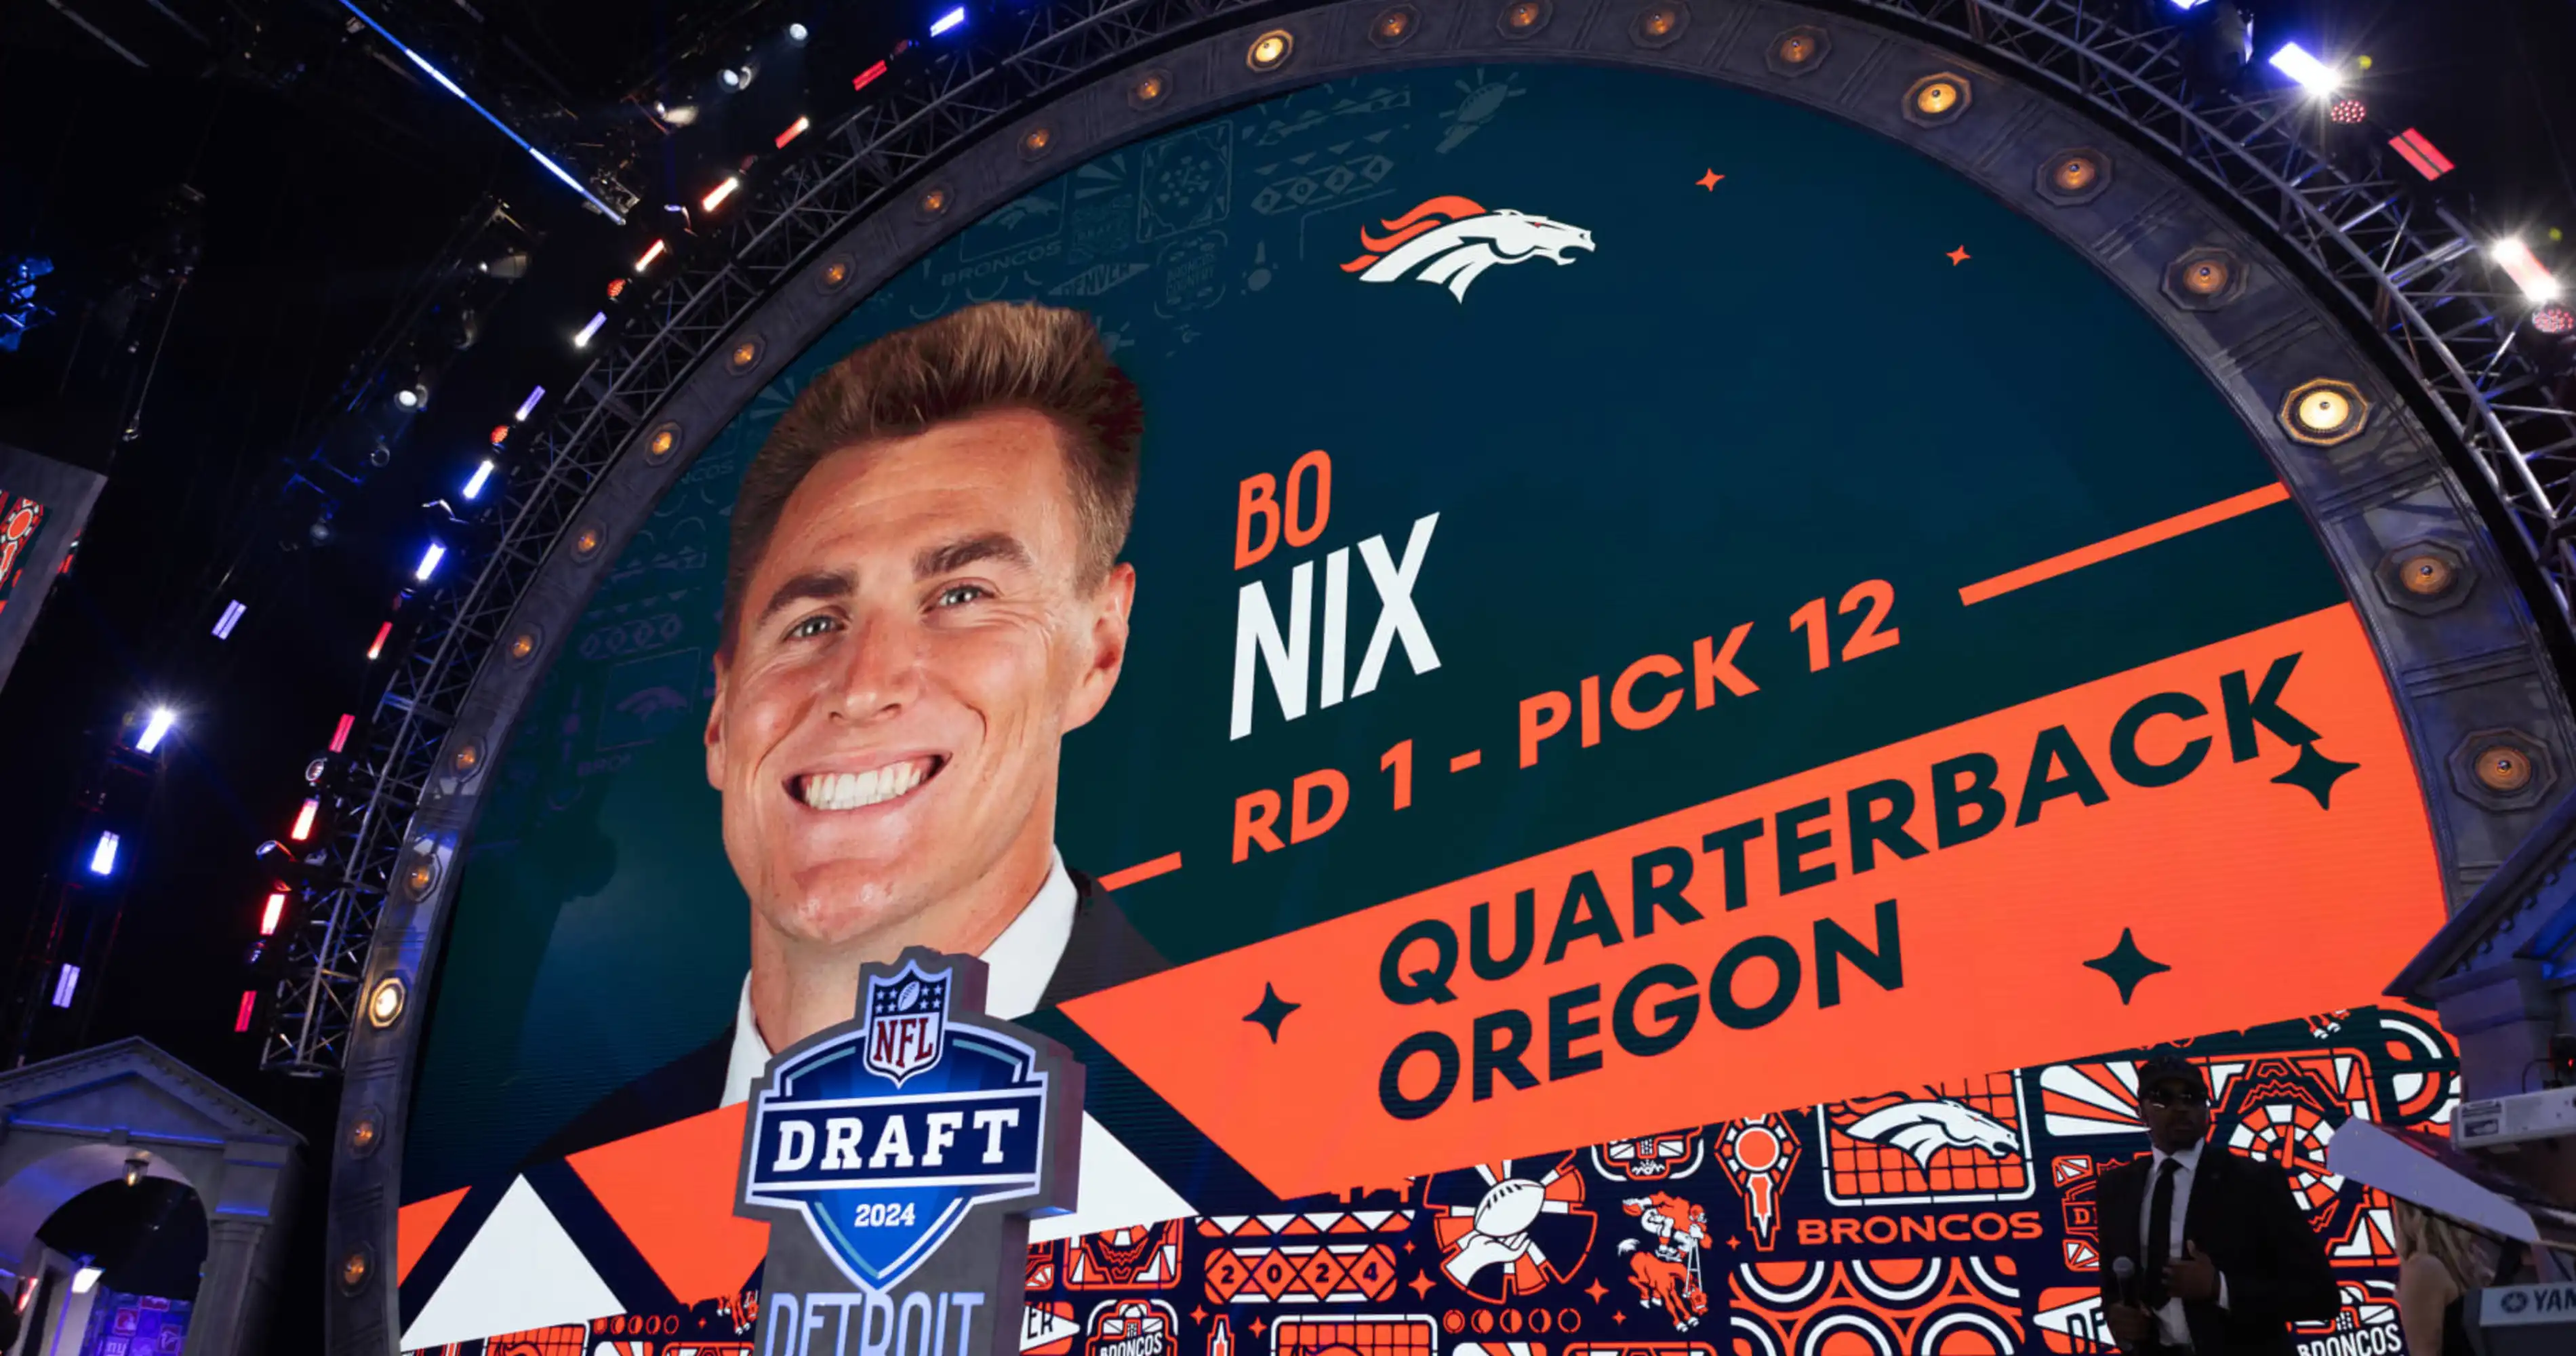 McShay criticizes Broncos for 'arrogant' choice of Bo Nix as draft pick